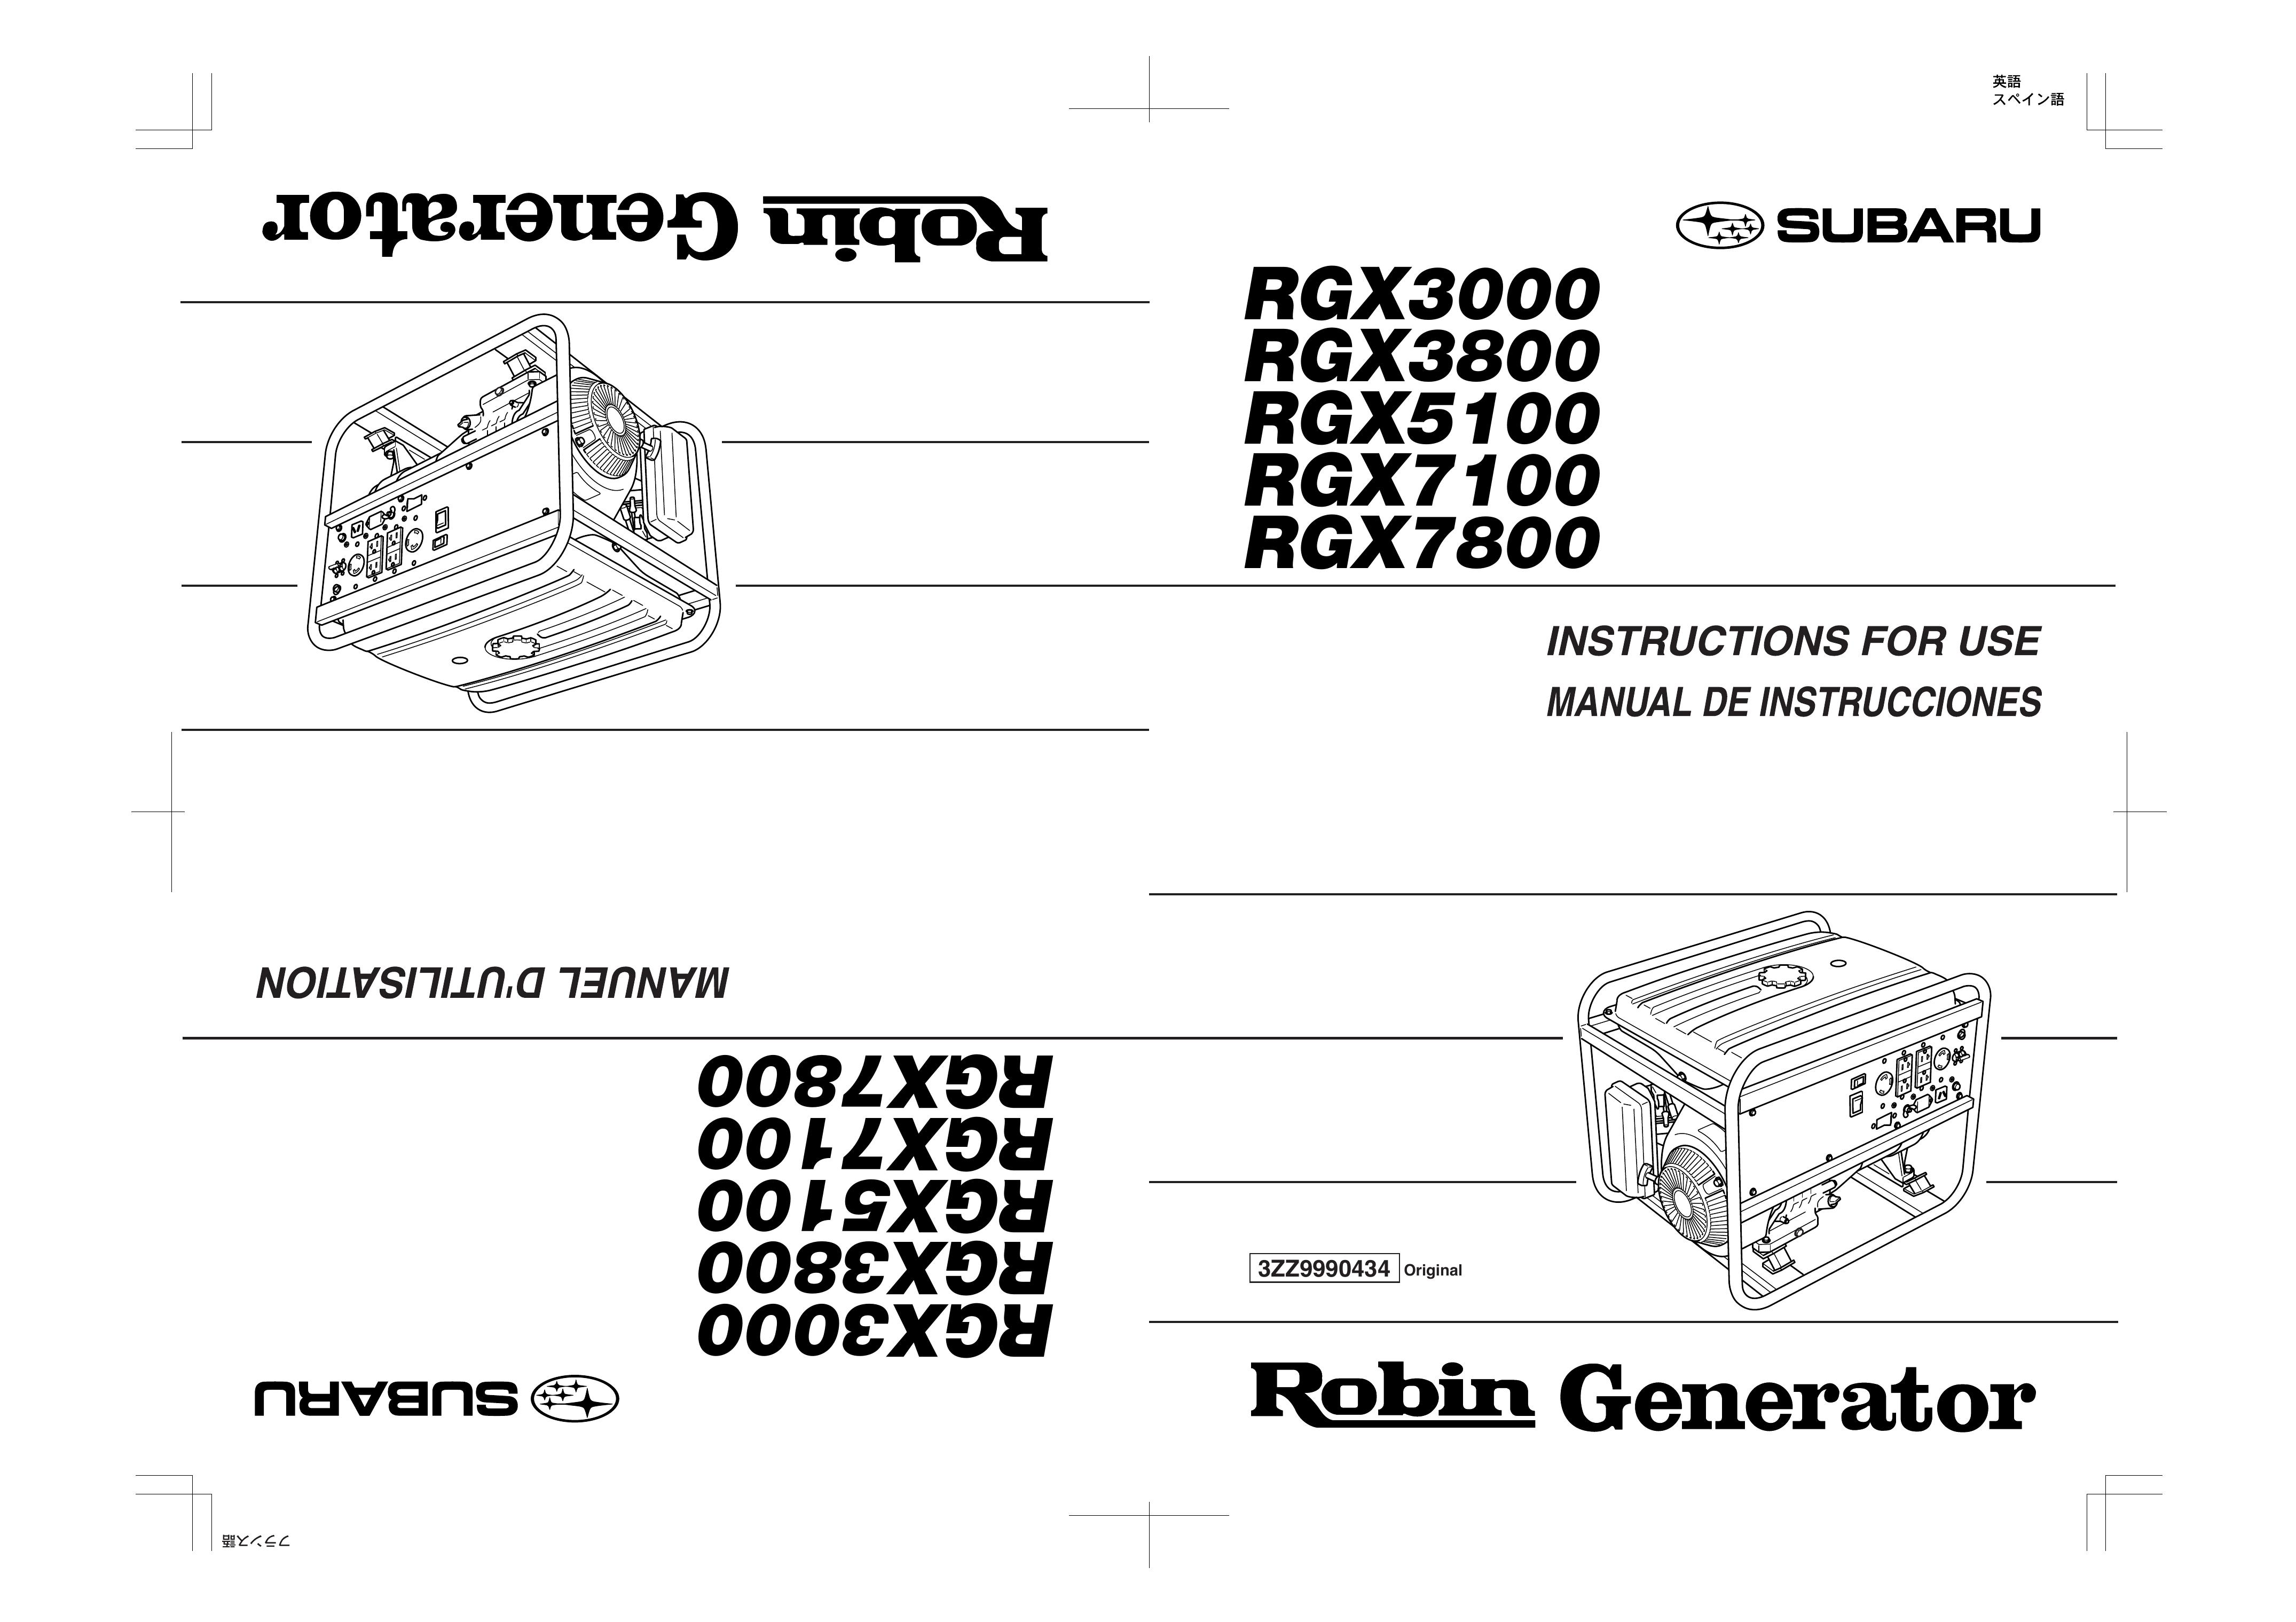 Subaru RGX5100 Portable Generator User Manual